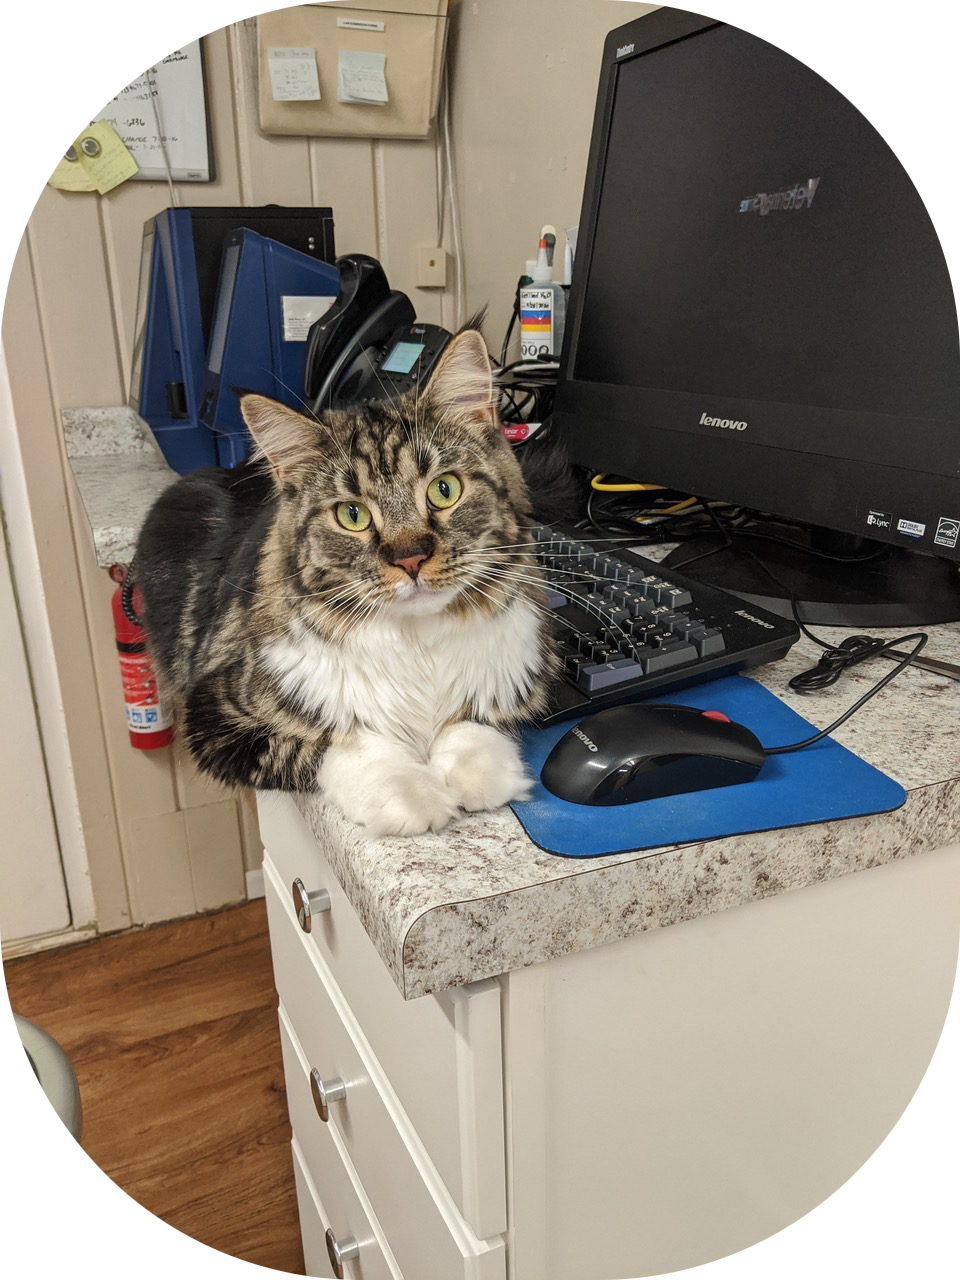 A cat sitting on a desk